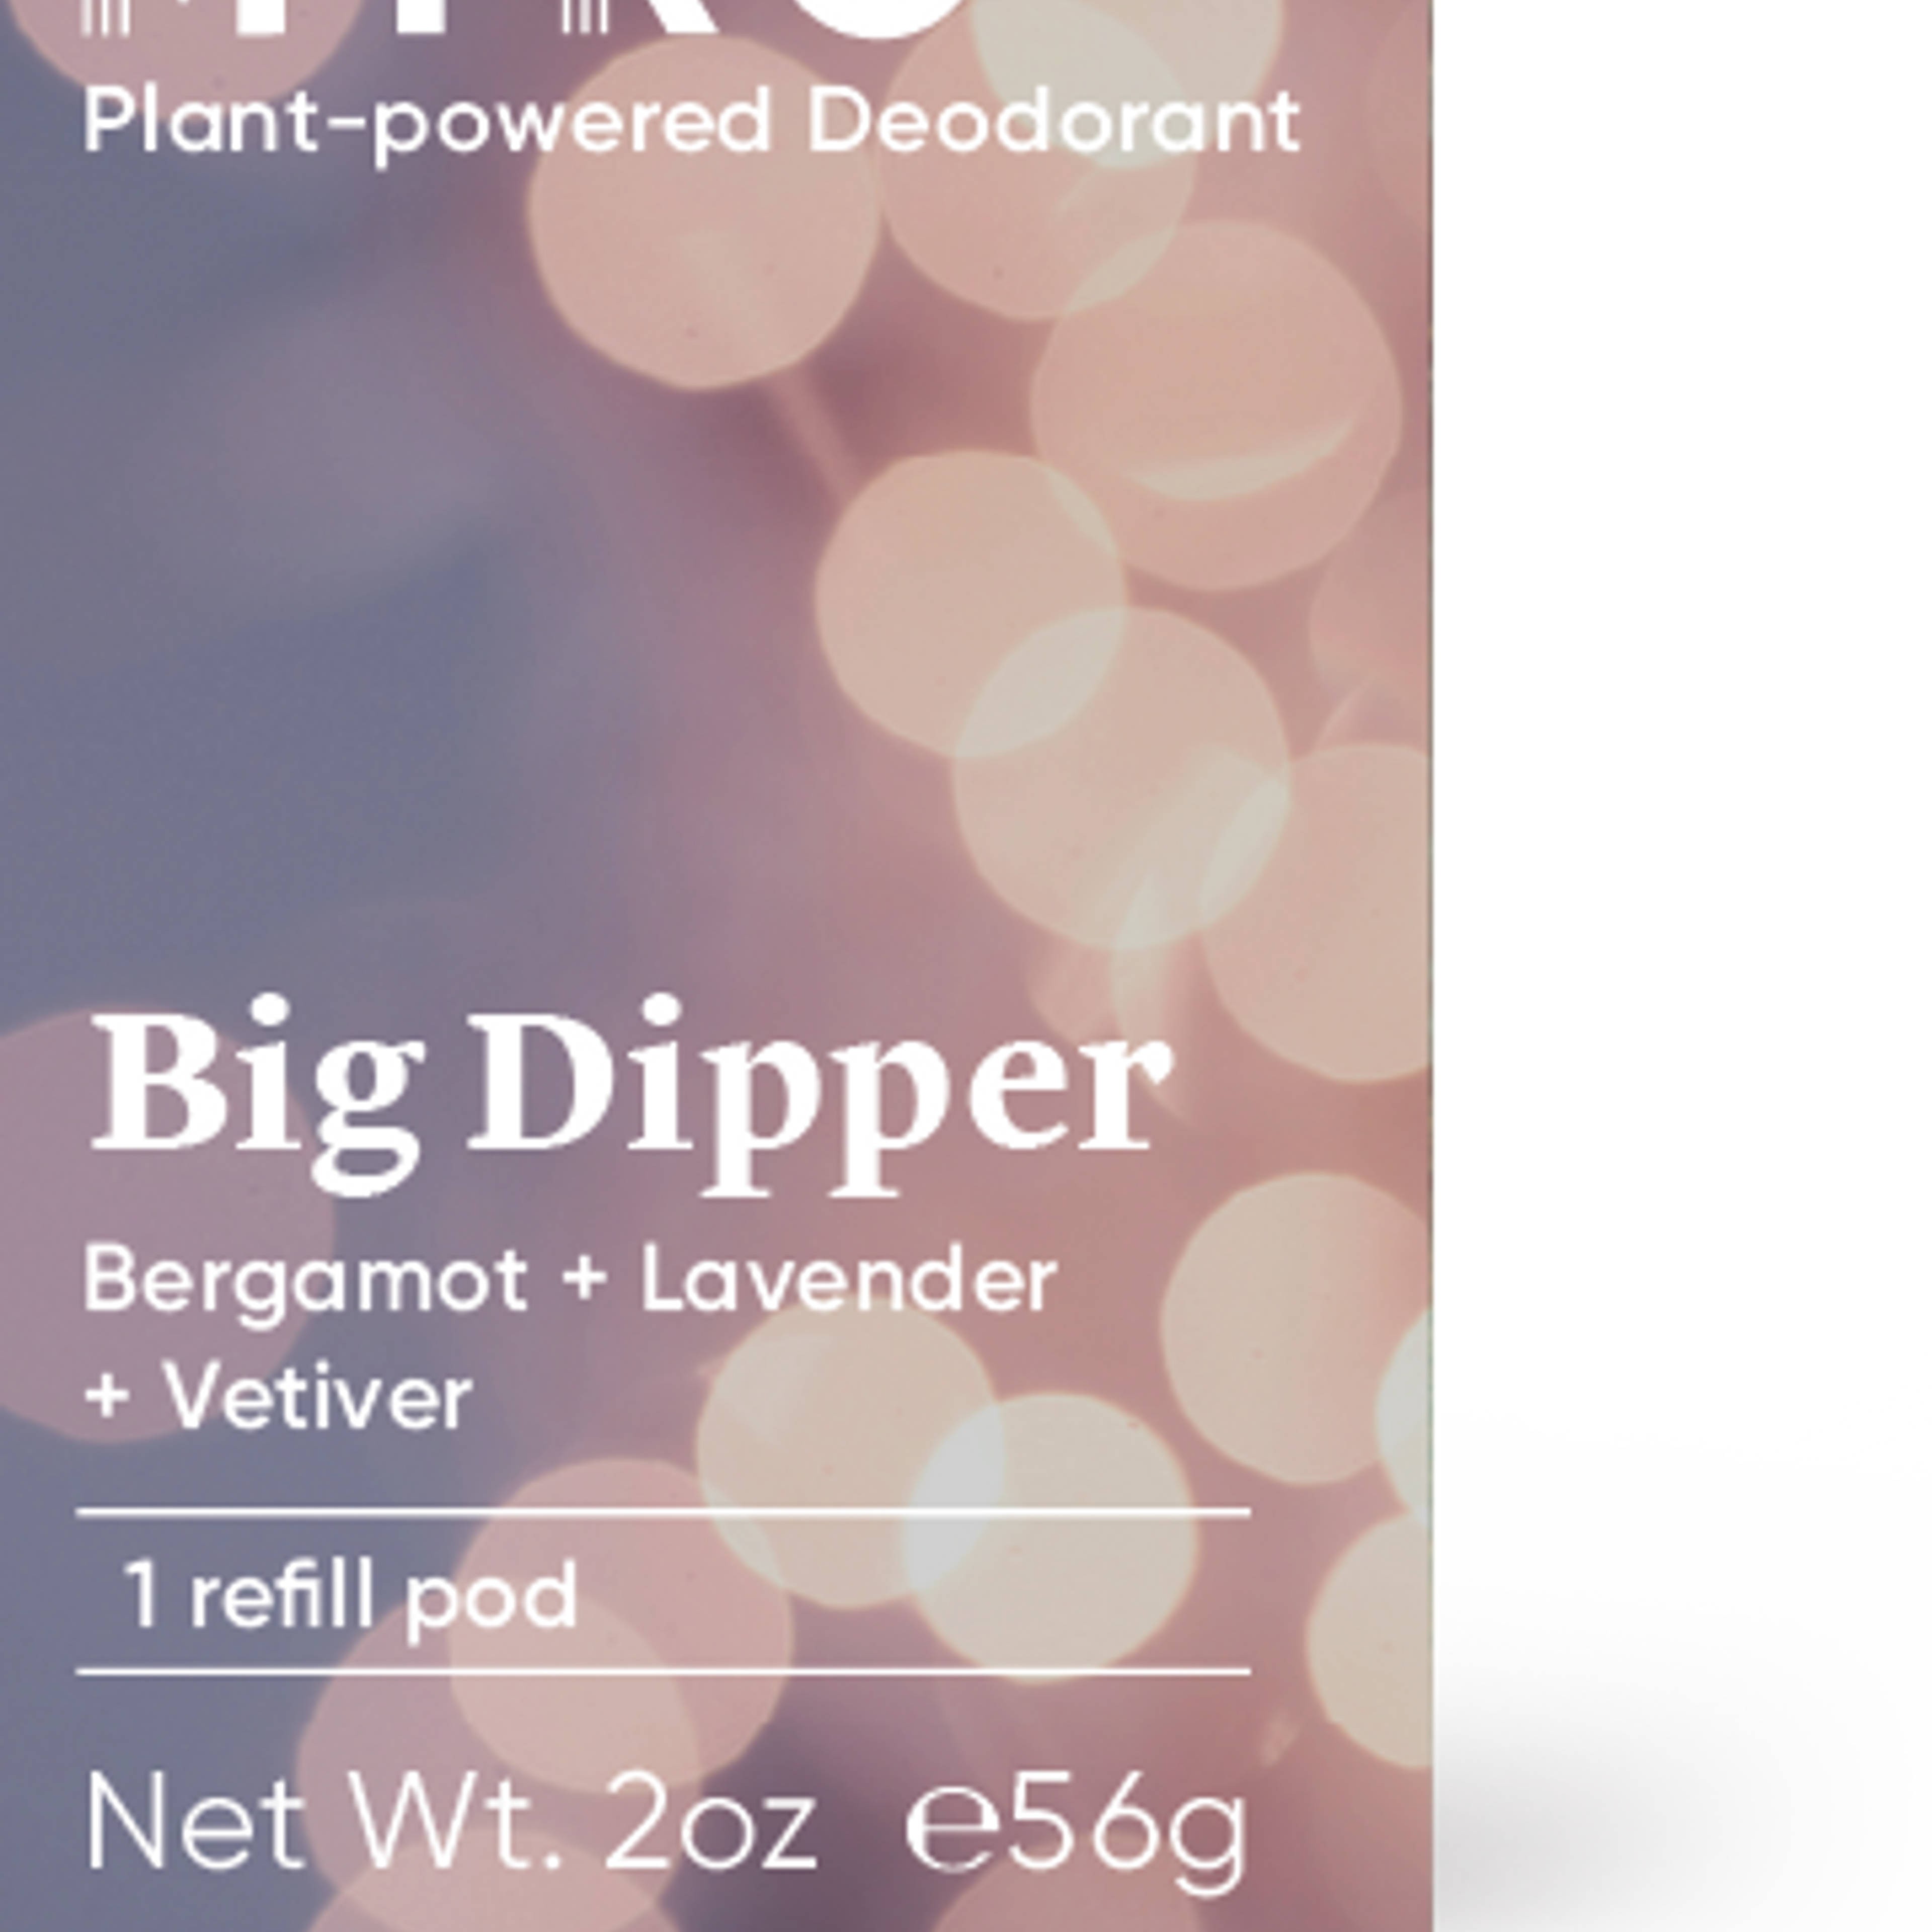 Big Dipper Deodorant